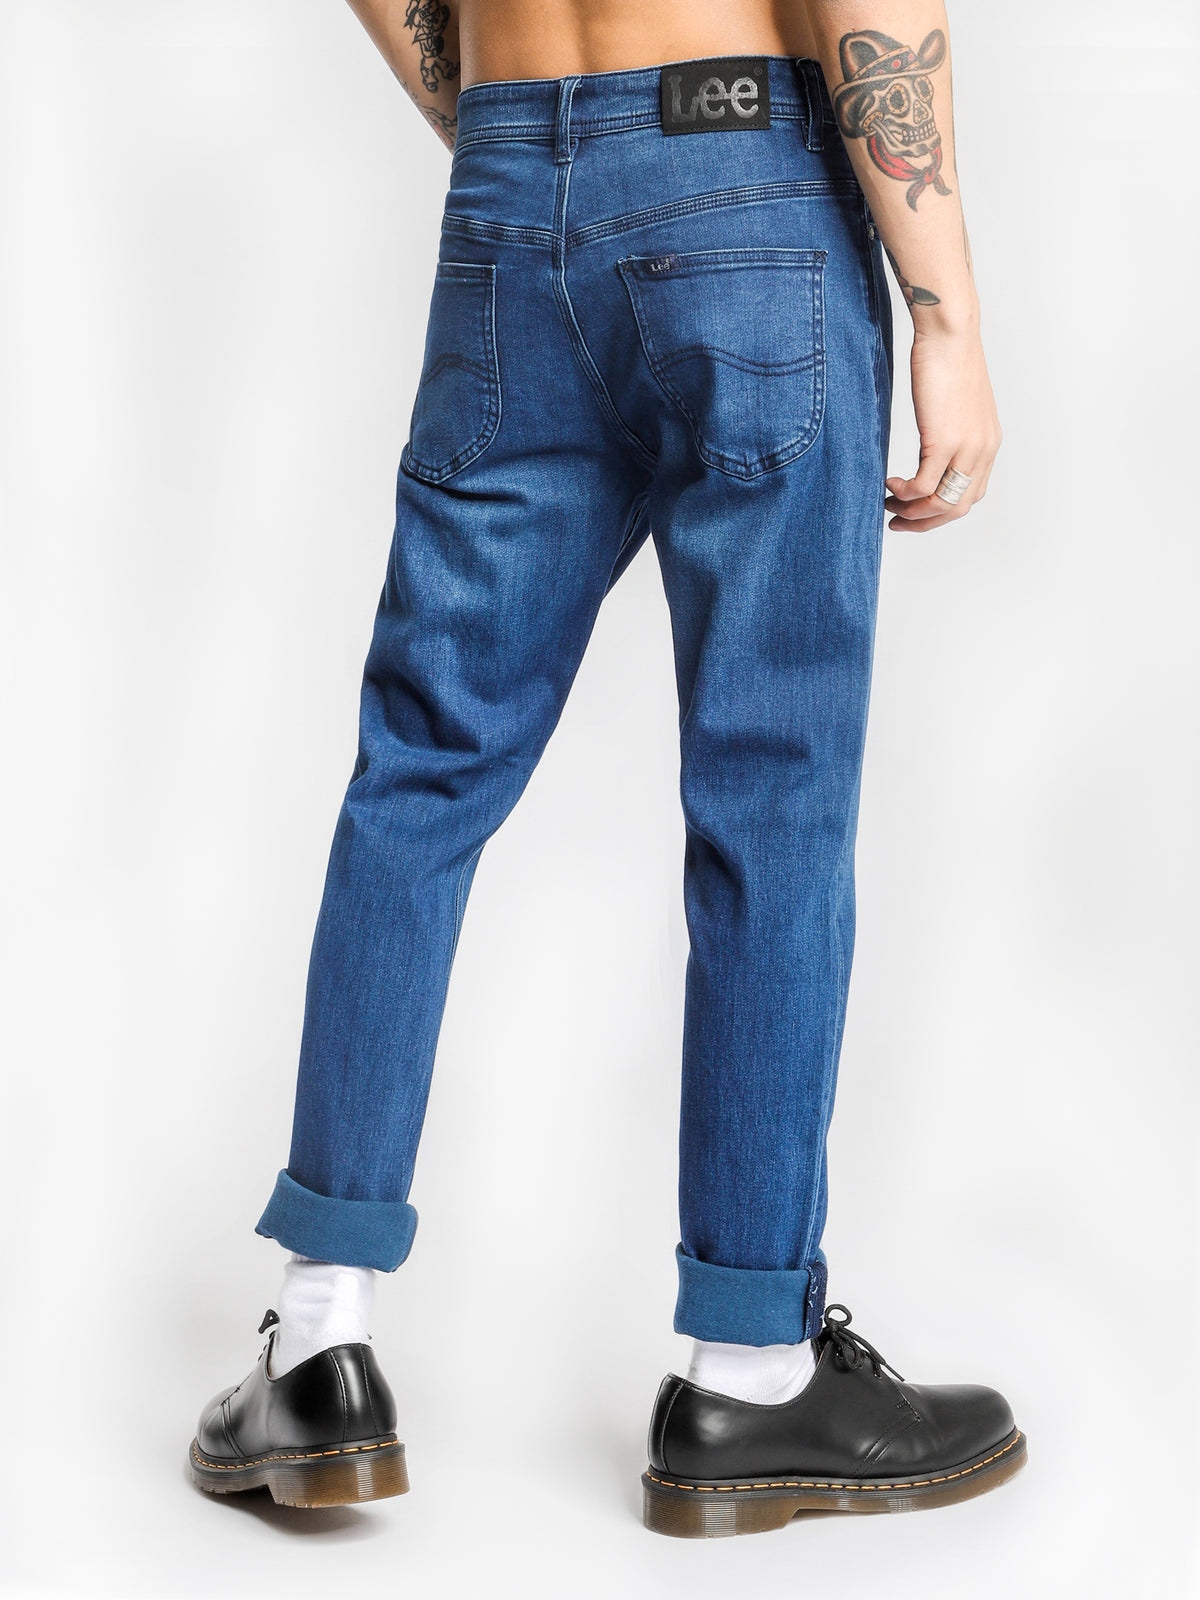 Z-Two Jeans in Detour Blue Denim - Glue Store